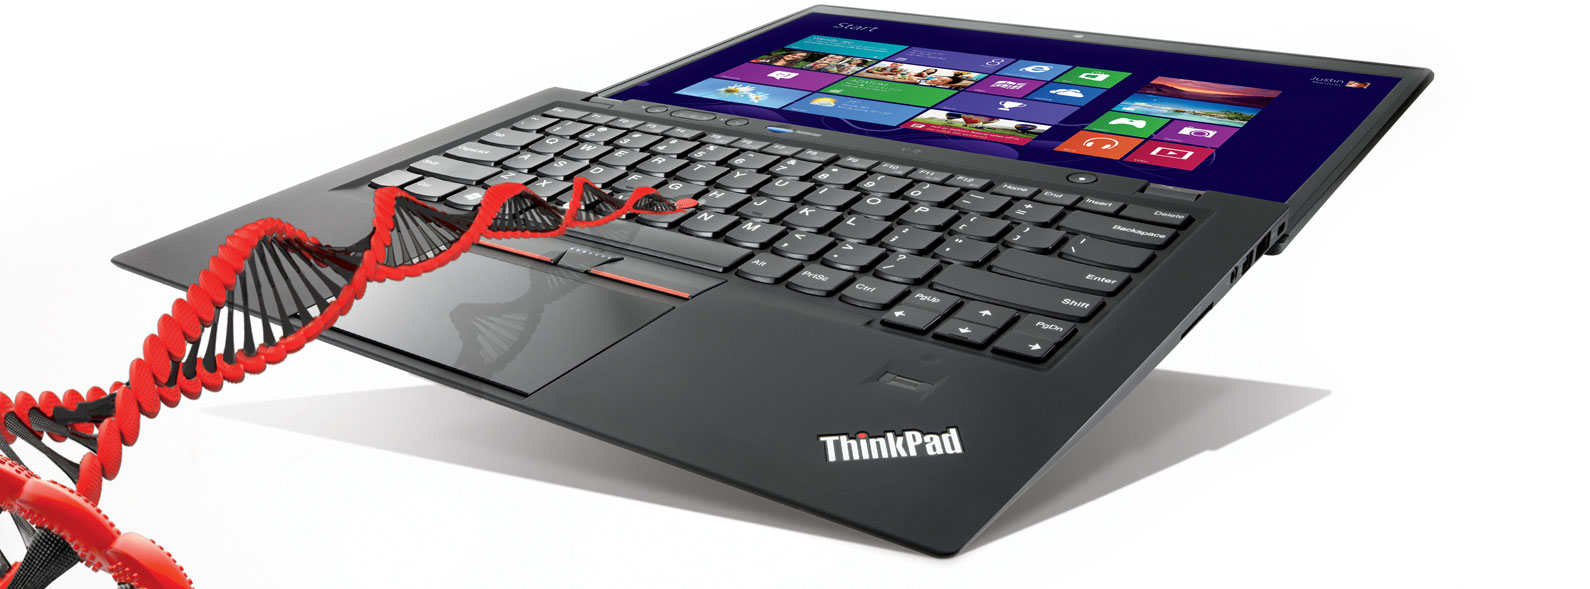 Ultrabook Lenovo Thinkpad X1 Carbon Intel Core I7 4600u 1ghz Vpro